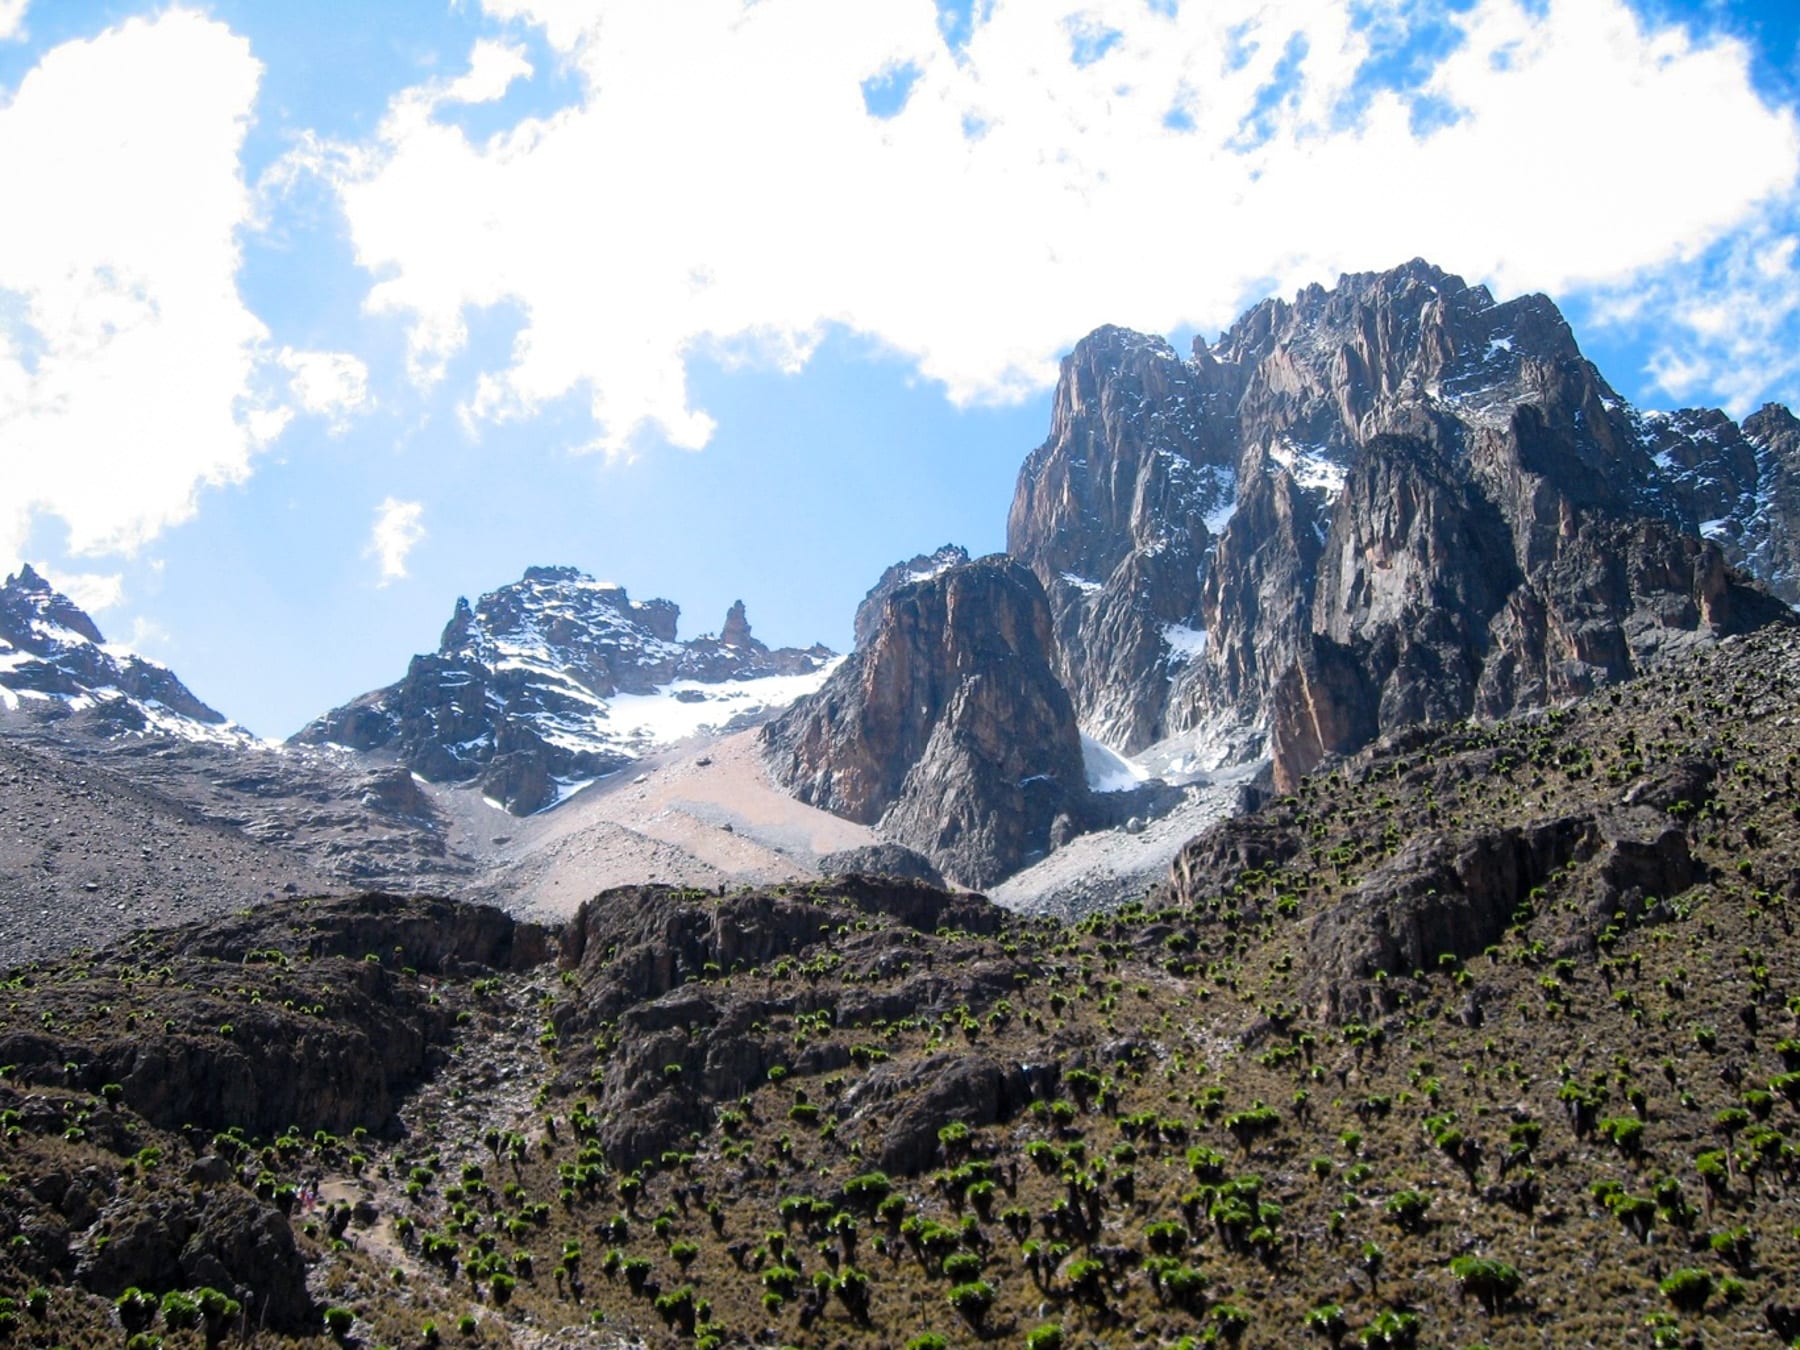 Mount Kenya National Park. Image by Geographical Association